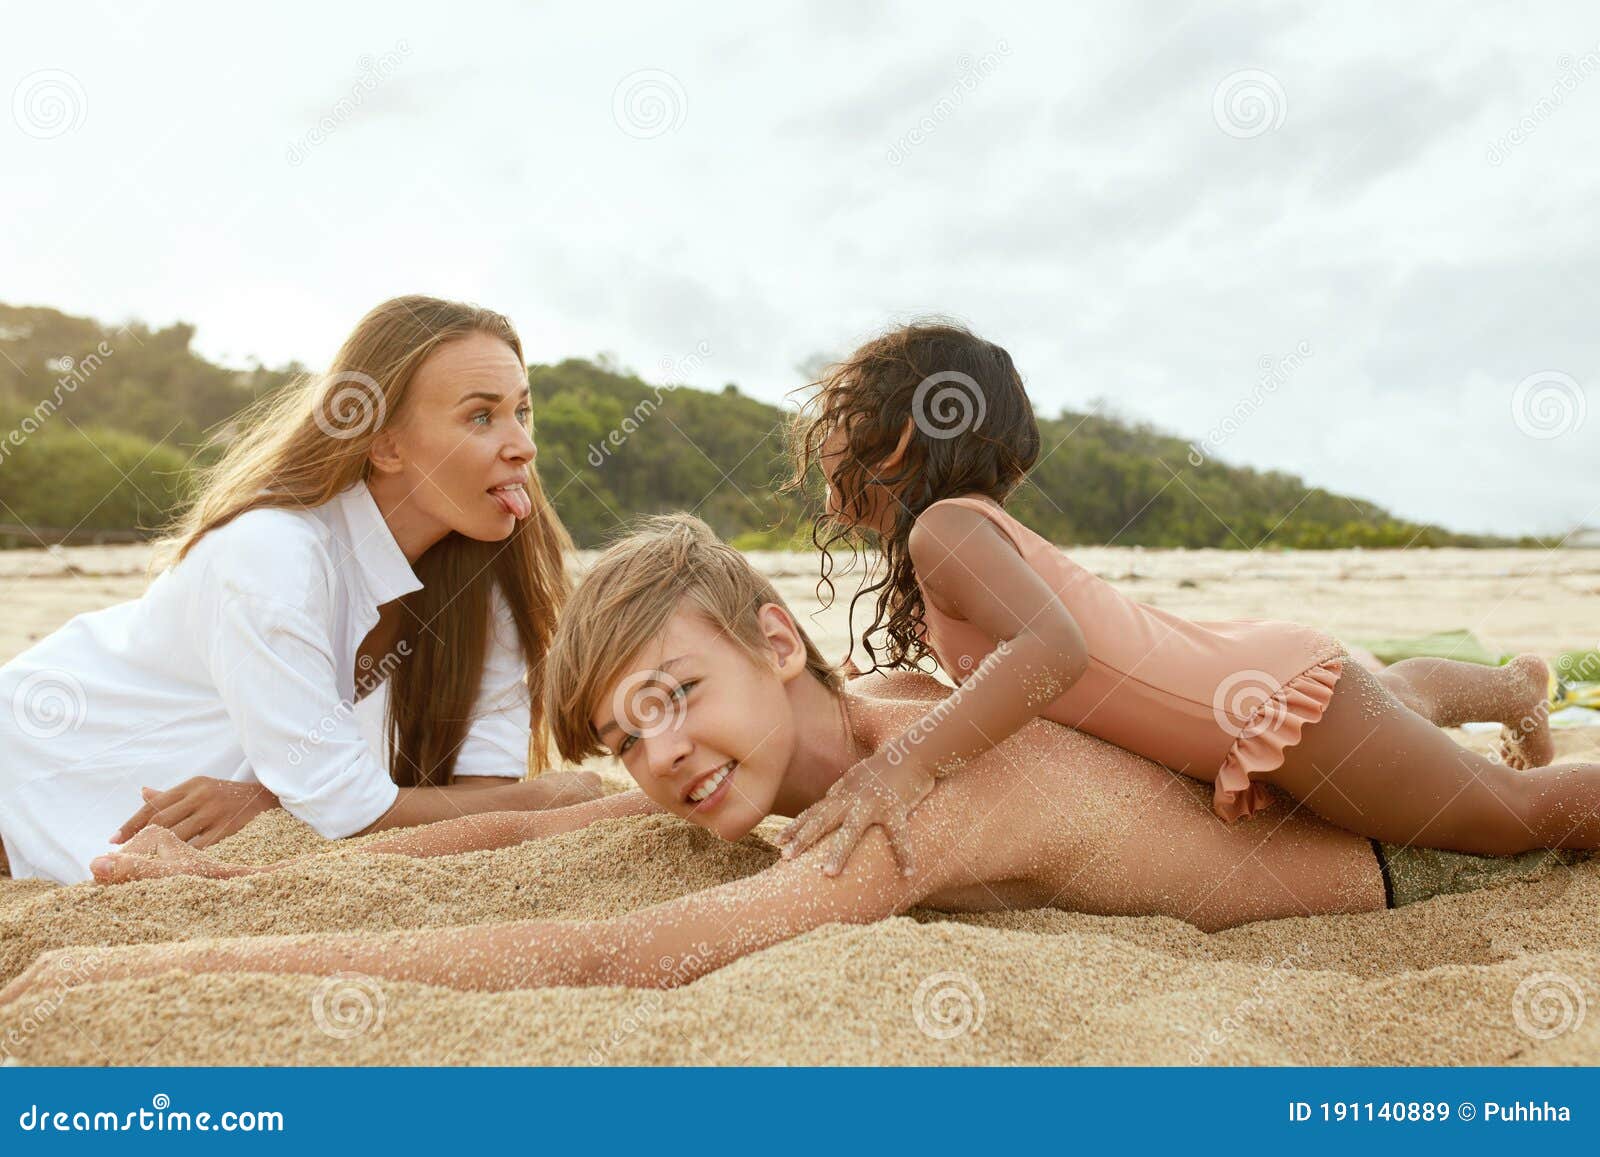 daysha jackson add nude beach family pics photo